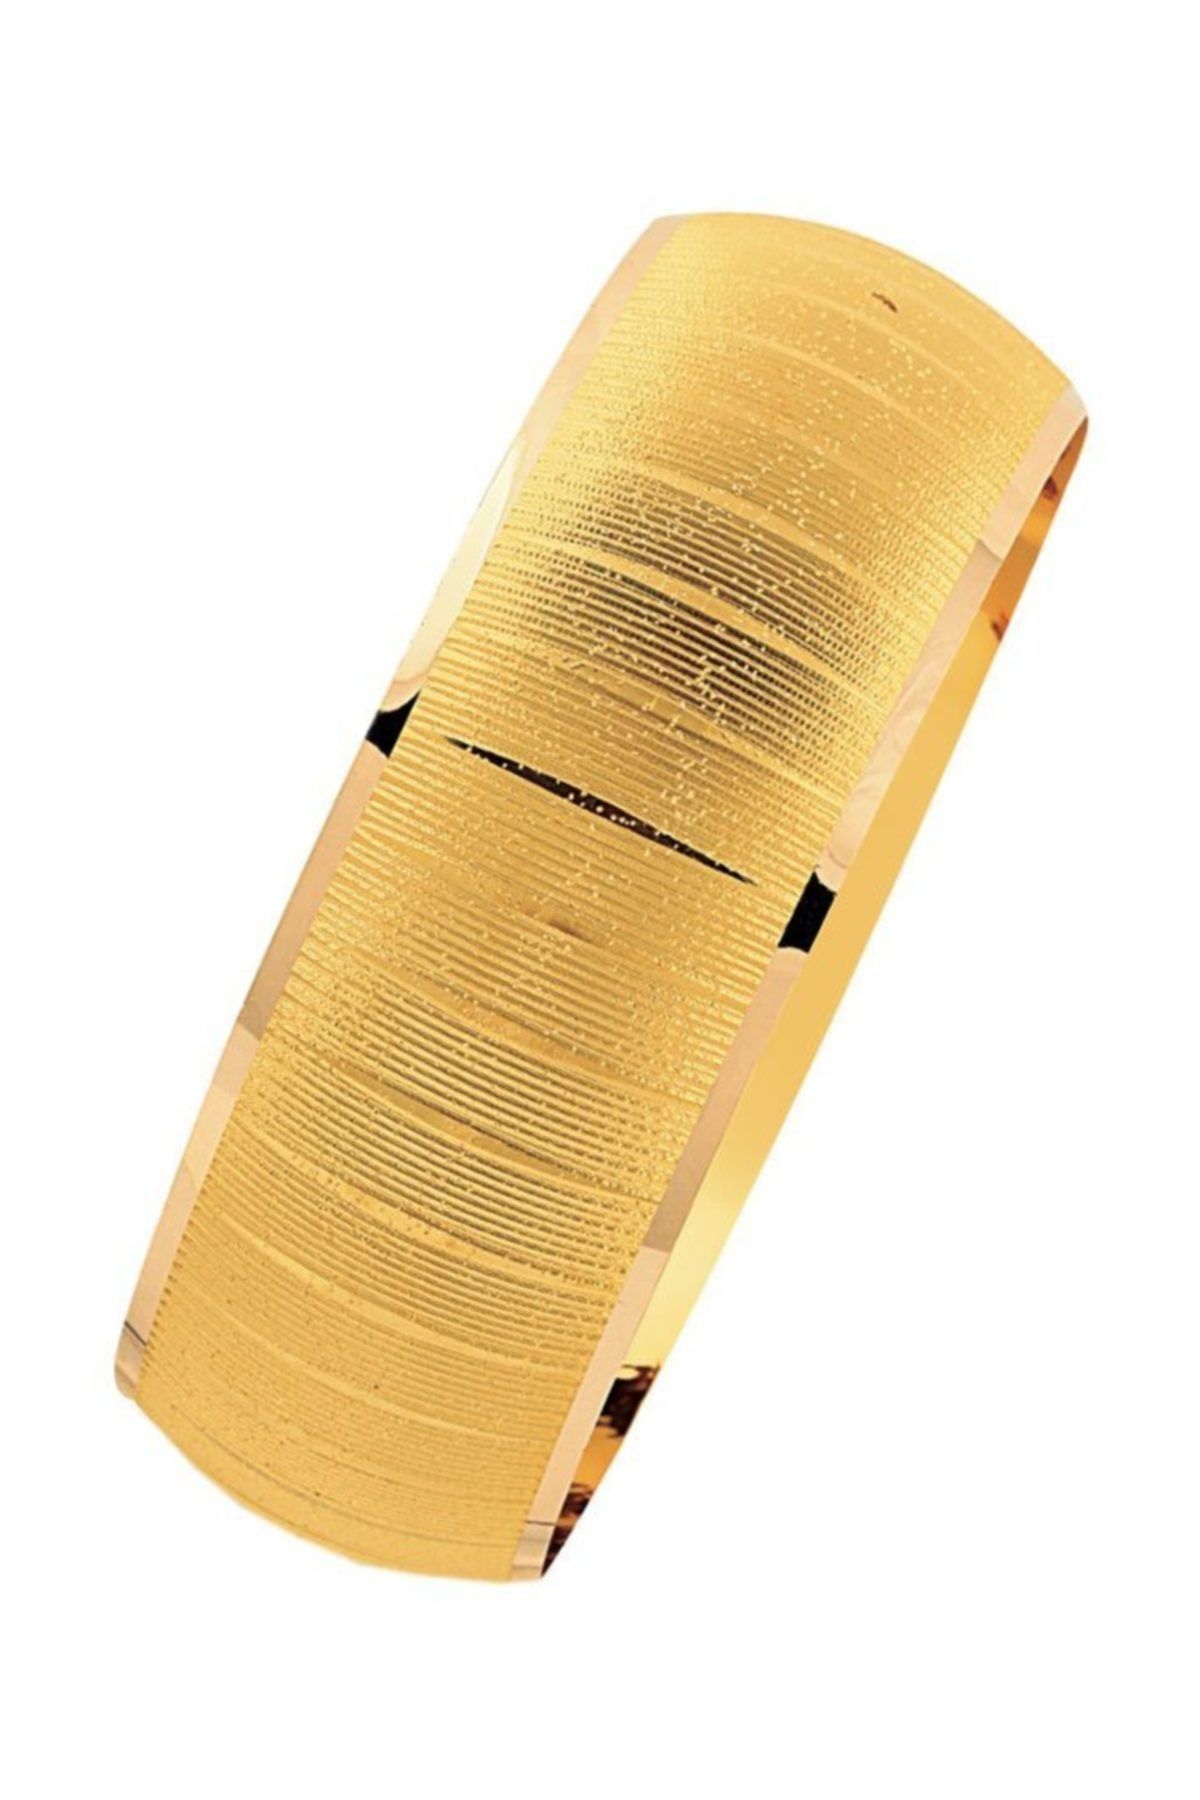 BİLEZİKHANE 14 Ayar Altın Mega Bilezik 25 Gram Ağaç Kabuğu Model